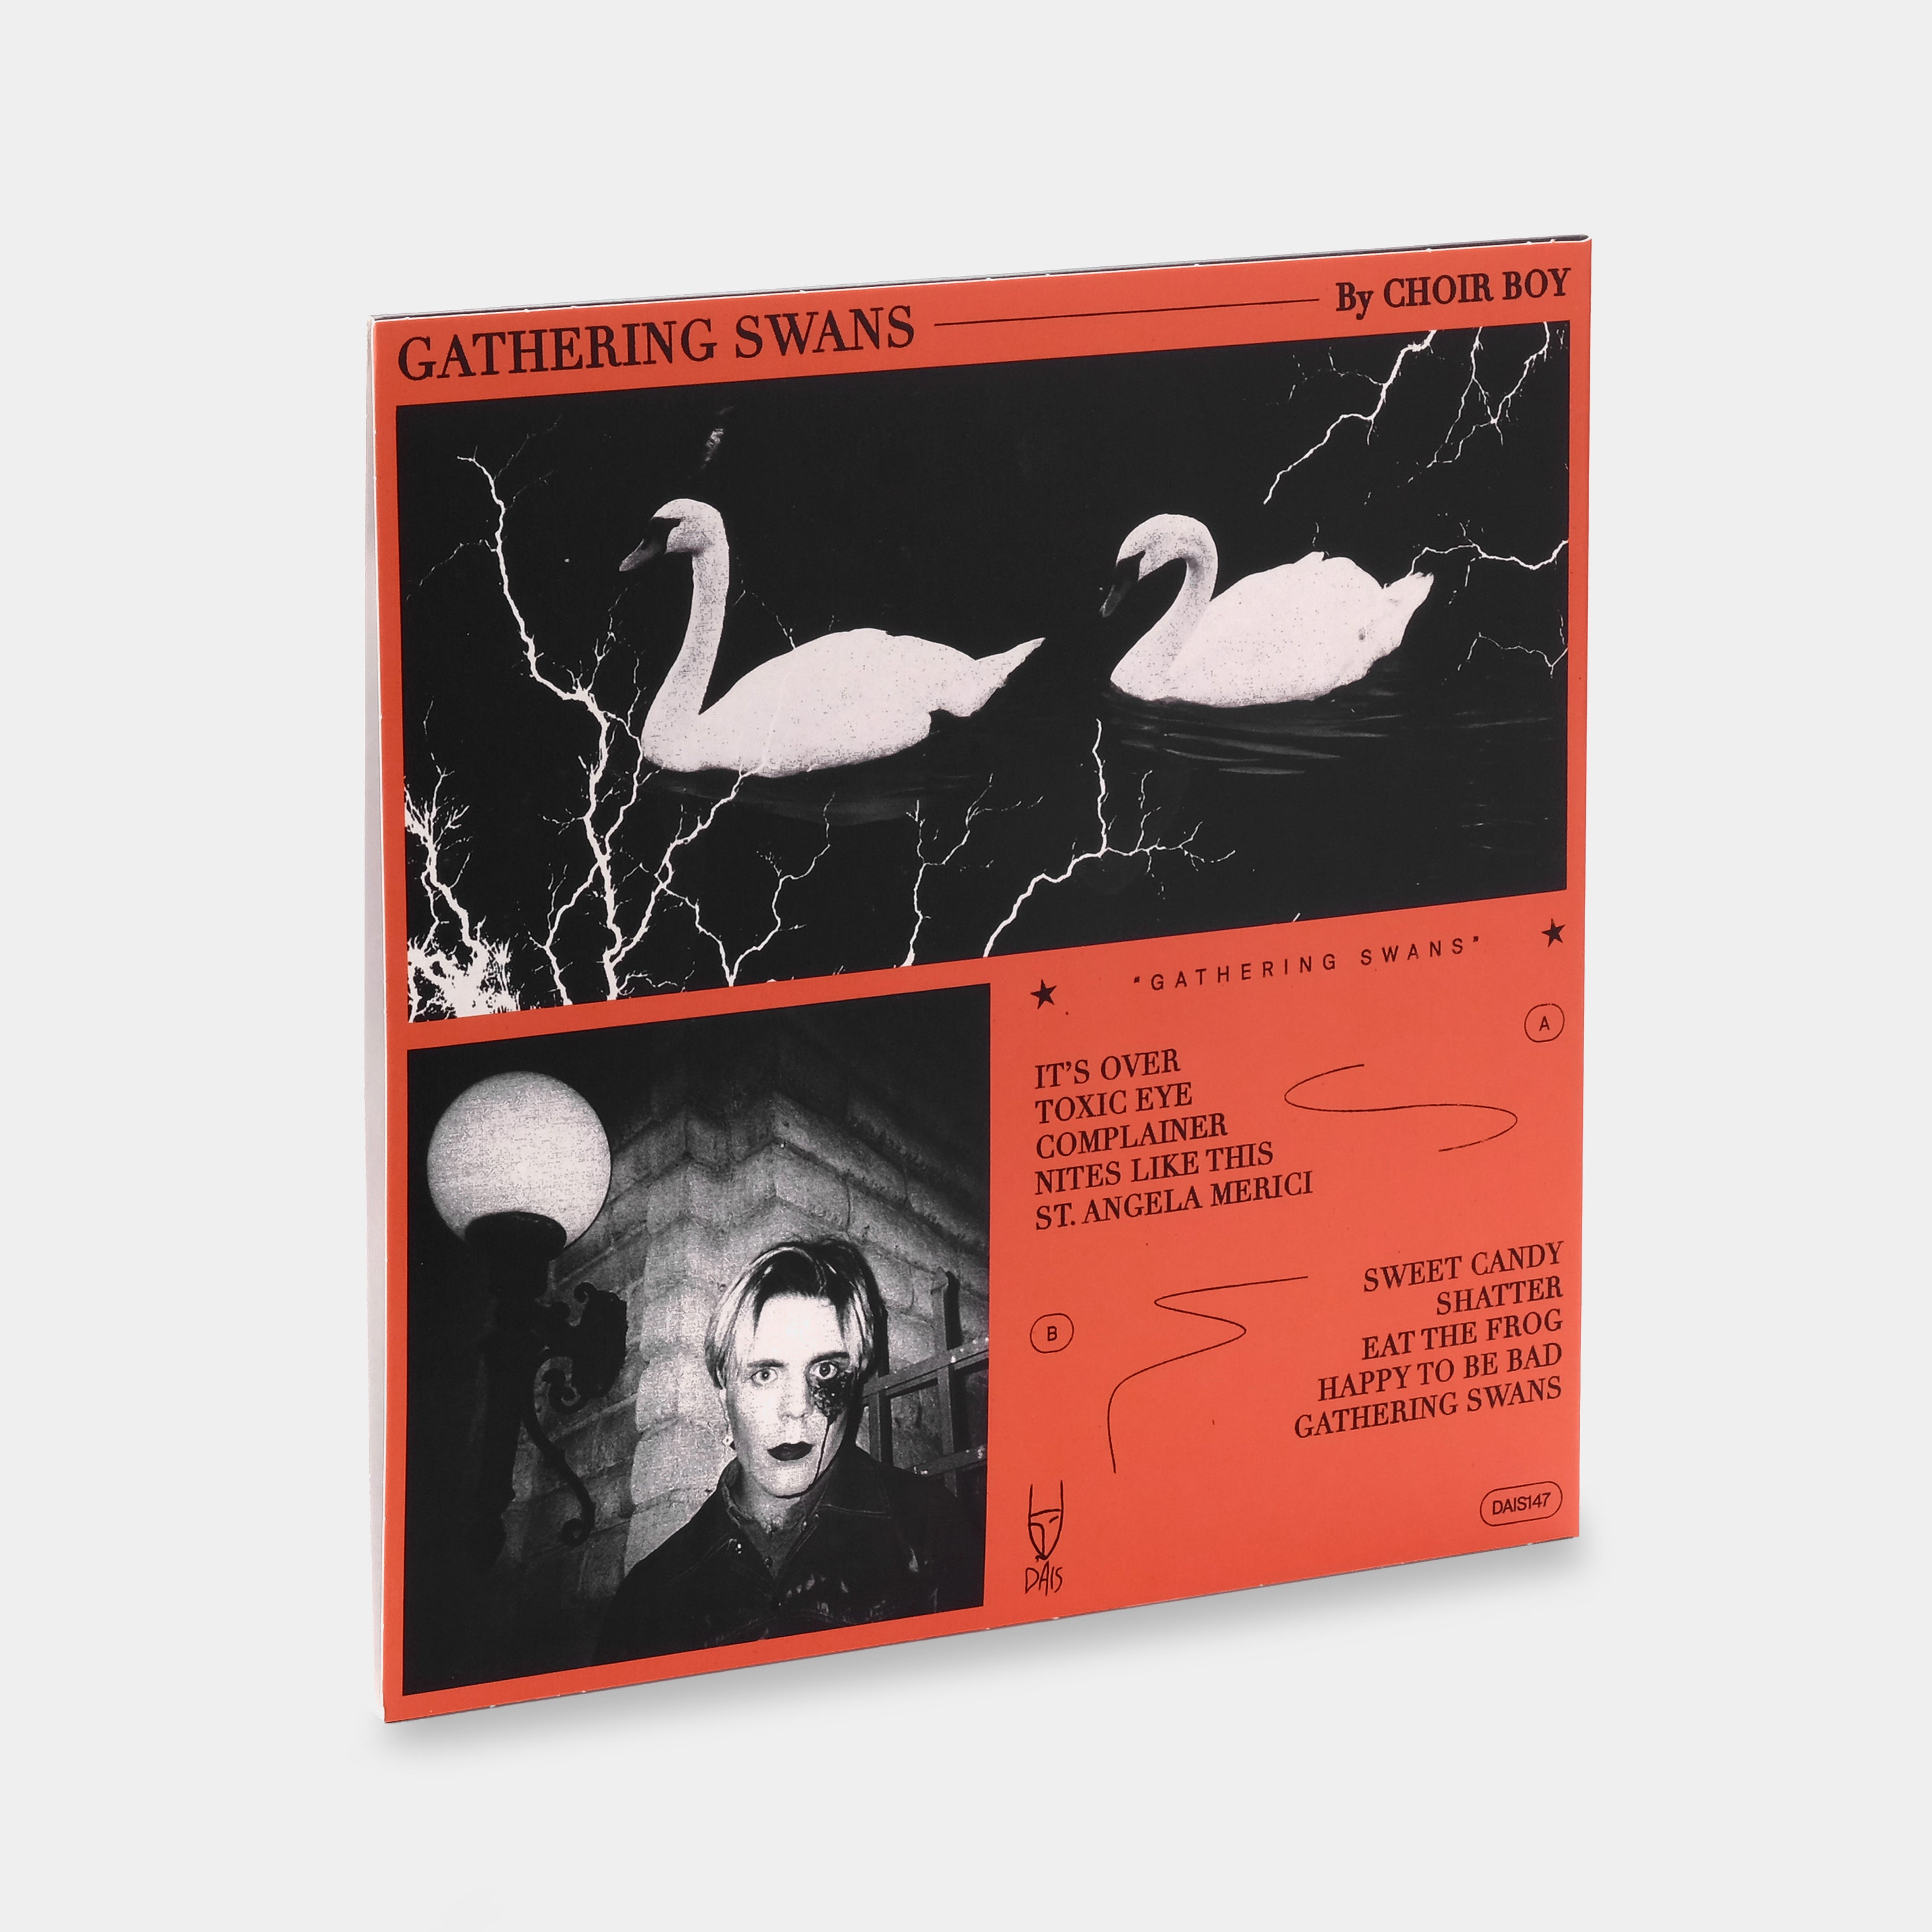 Choir Boy - Gathering Swans Limited Edition LP Cream Vinyl Record